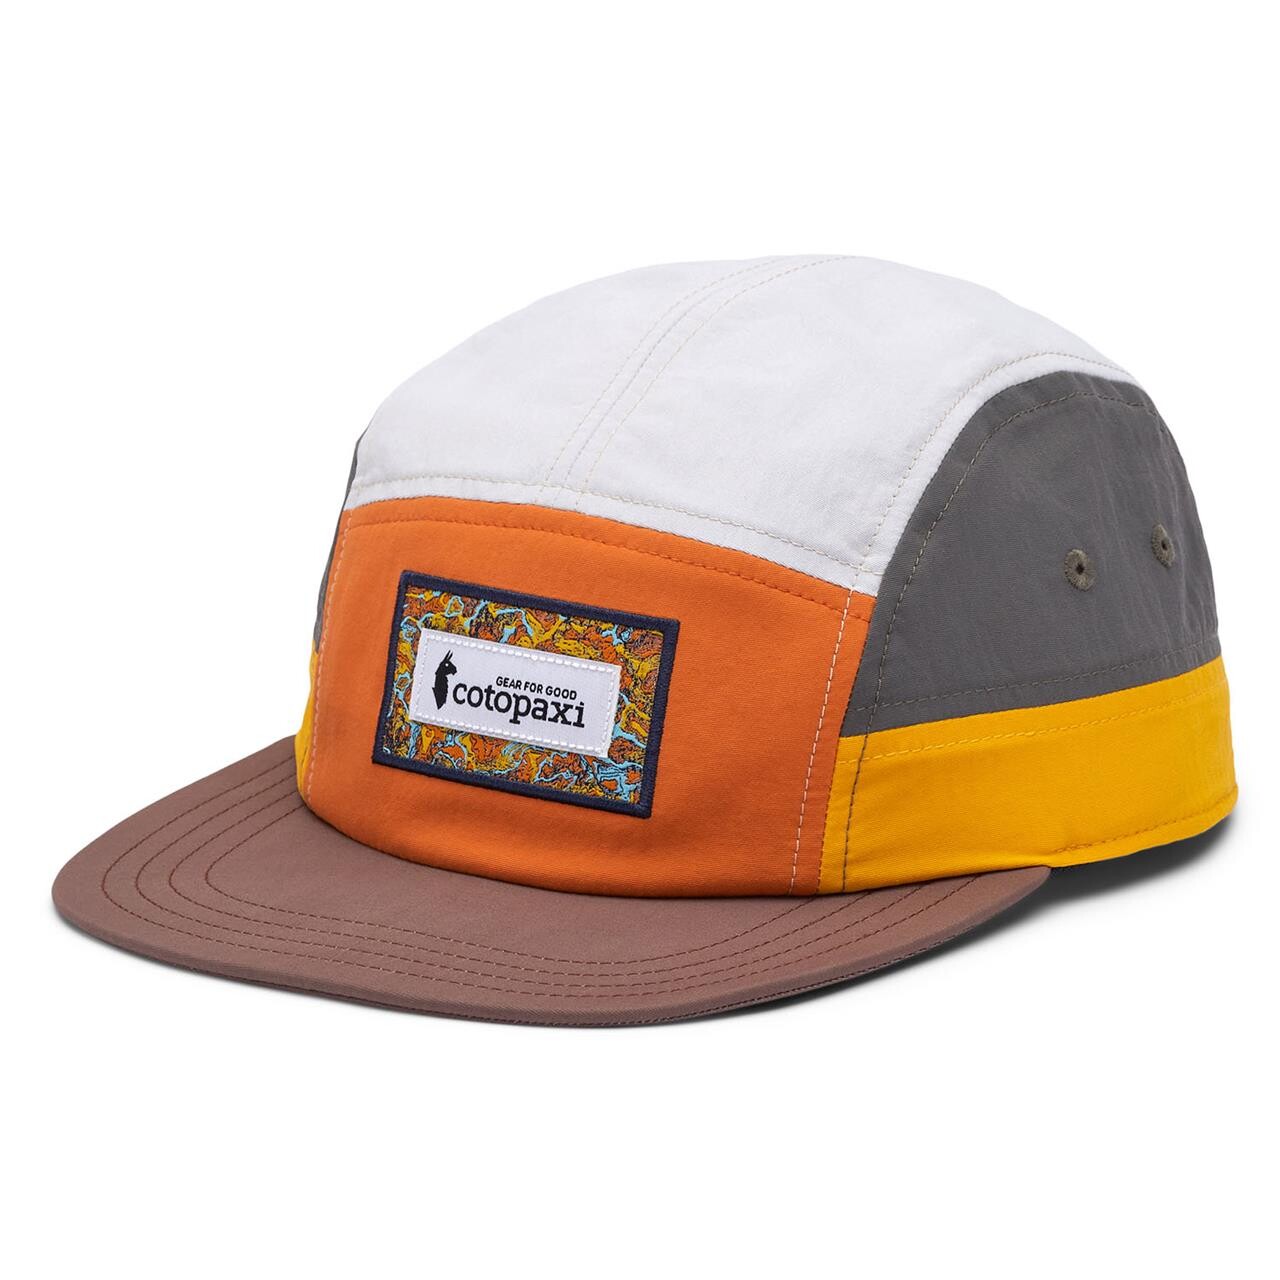 Cotopaxi Altitude Tech 5-panel Hat (Orange (TAMARINDO/ACORN) One size)